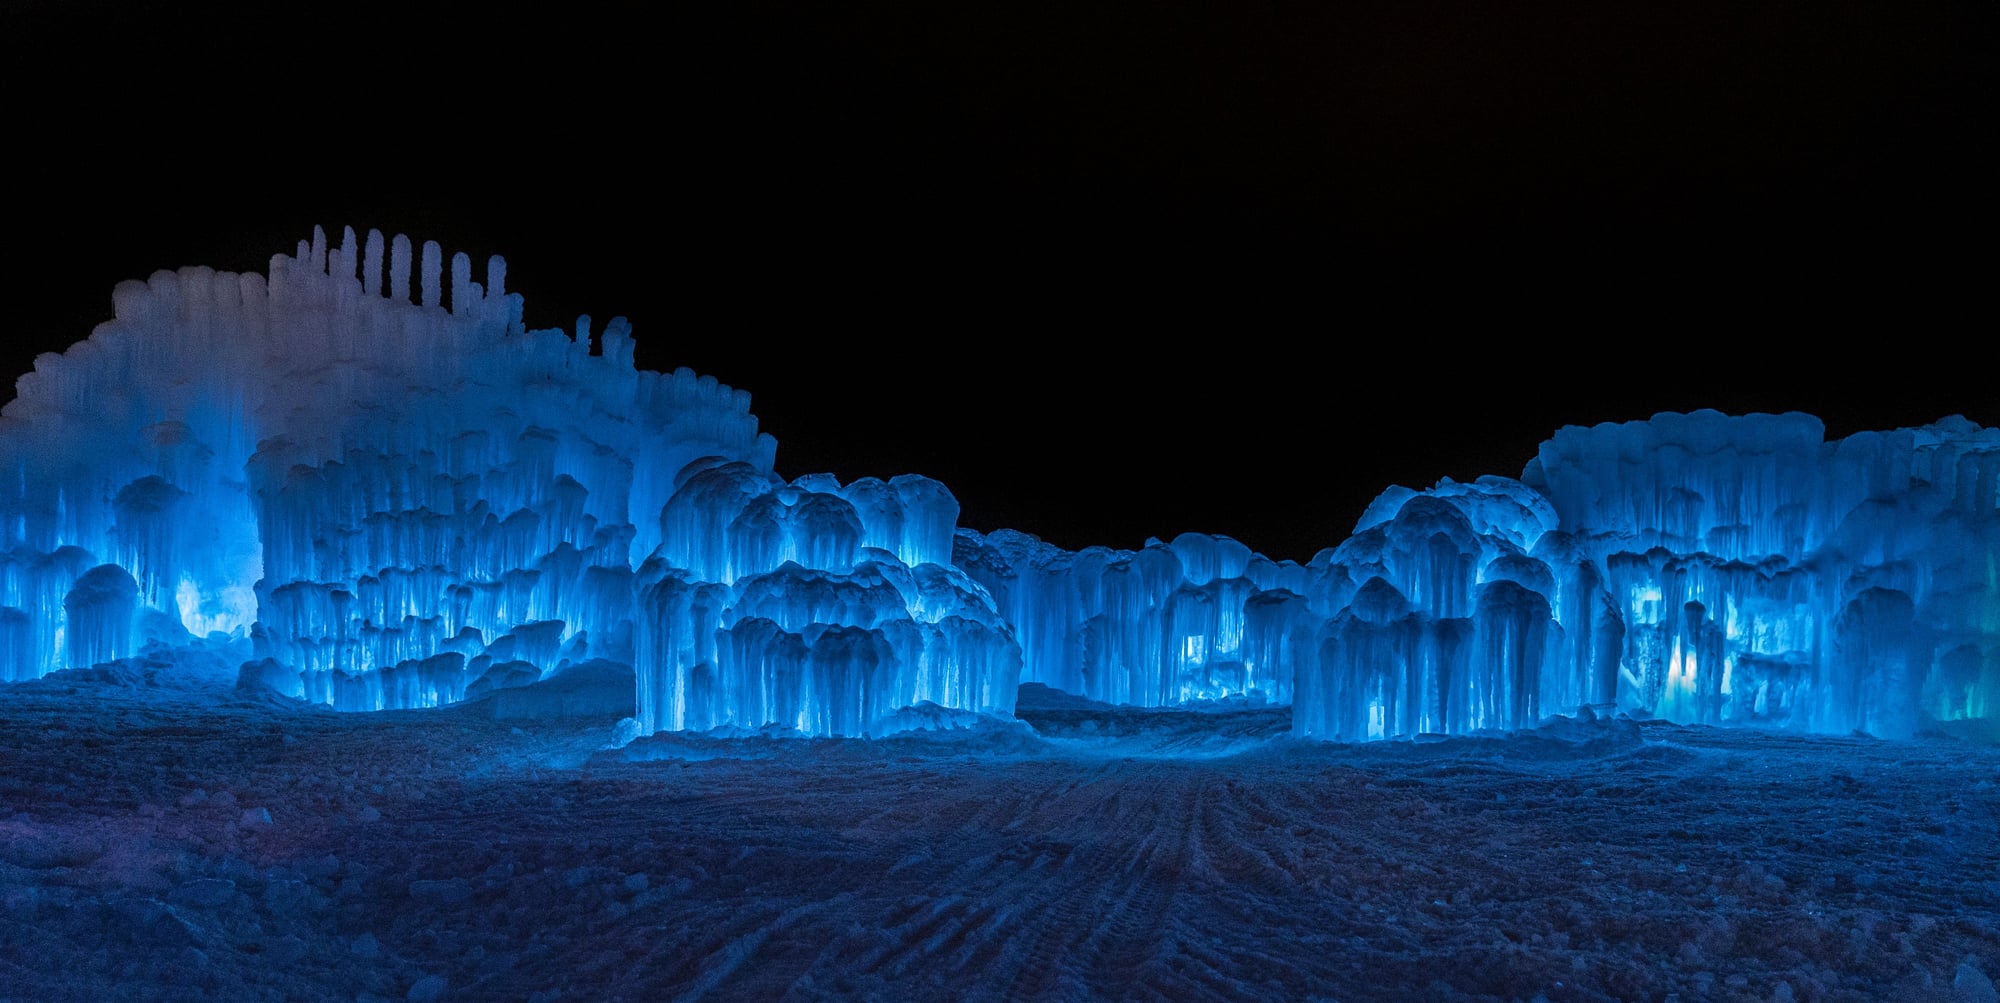 Marvel in the magic of Brent Christensen's translucent ice castles. 